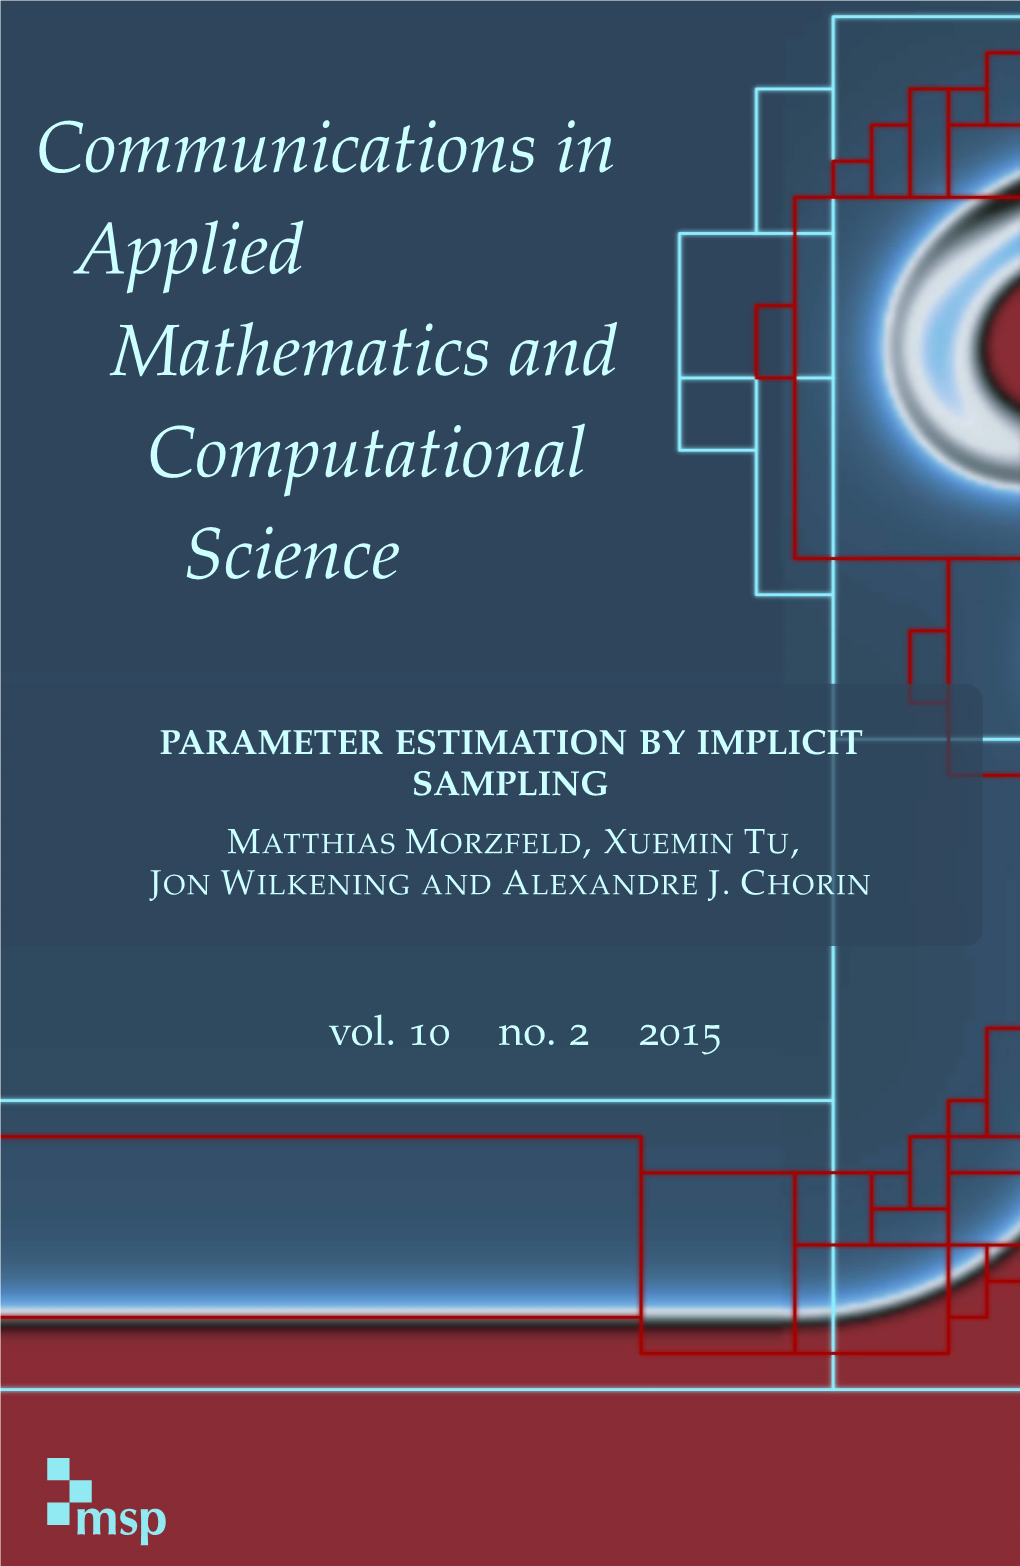 Parameter Estimation by Implicit Sampling Matthias Morzfeld,Xuemin Tu, Jon Wilkeningand Alexandre J.Chorin